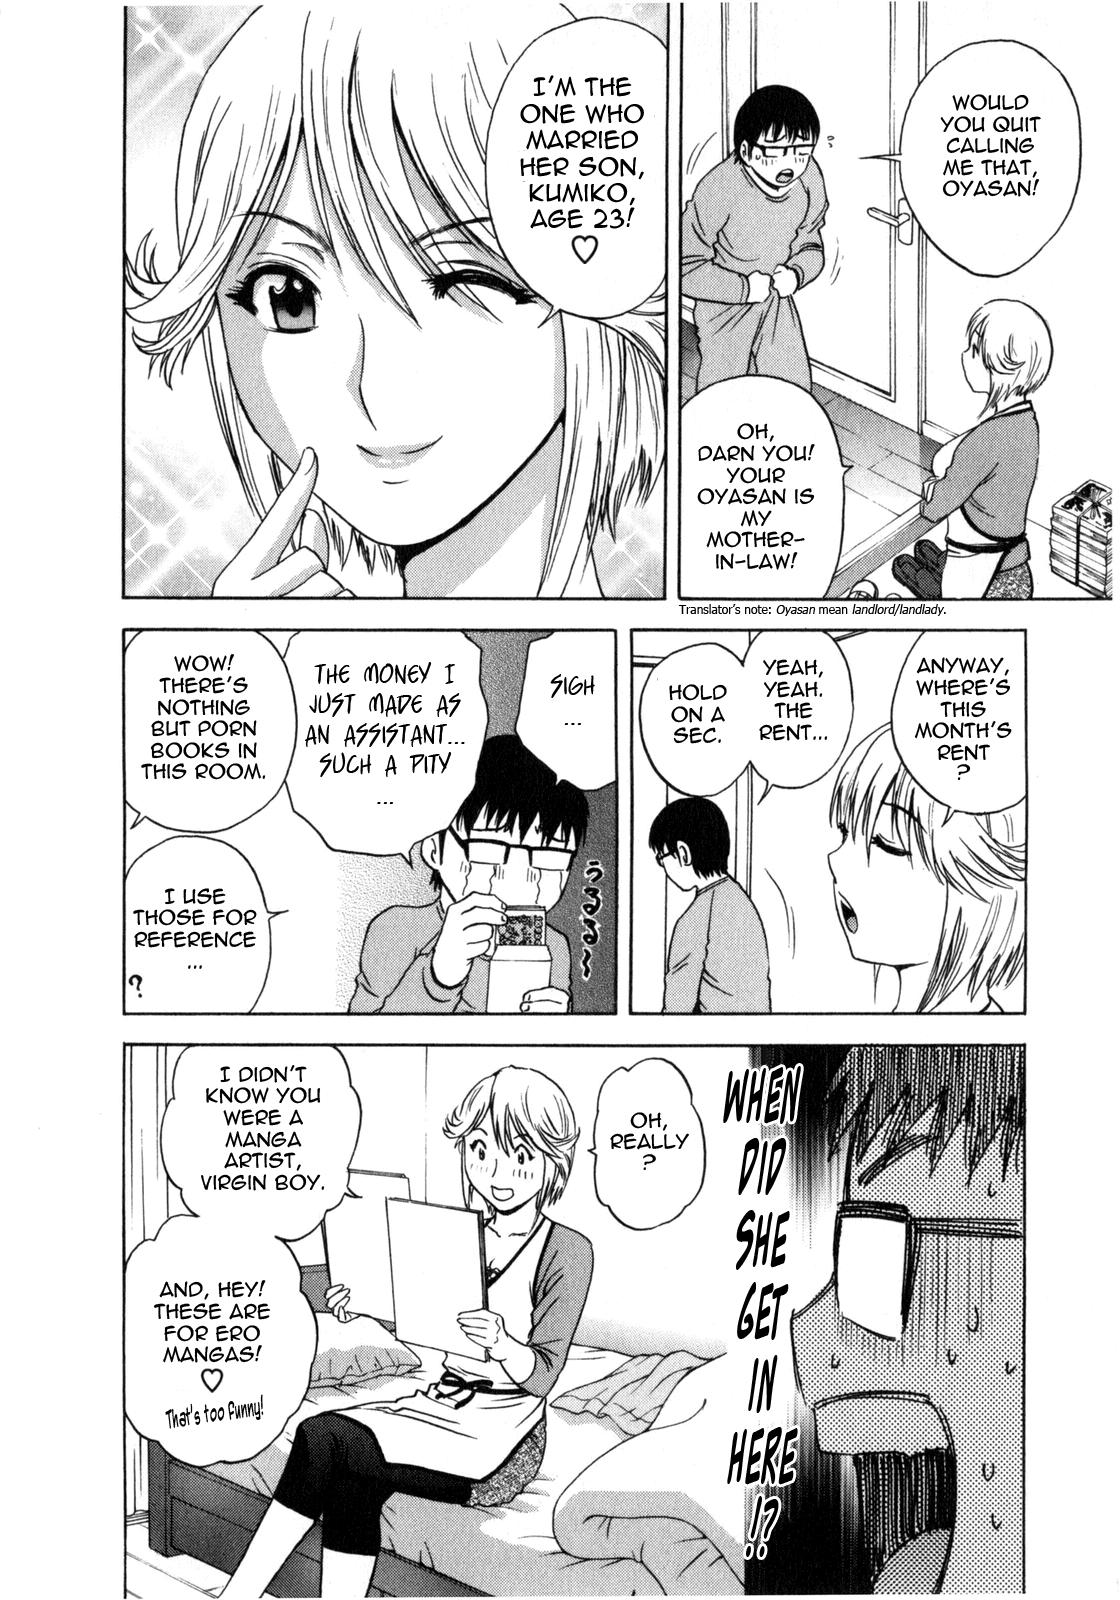 [Hidemaru] Life with Married Women Just Like a Manga 1 - Ch. 1-2 [English] {Tadanohito} 29